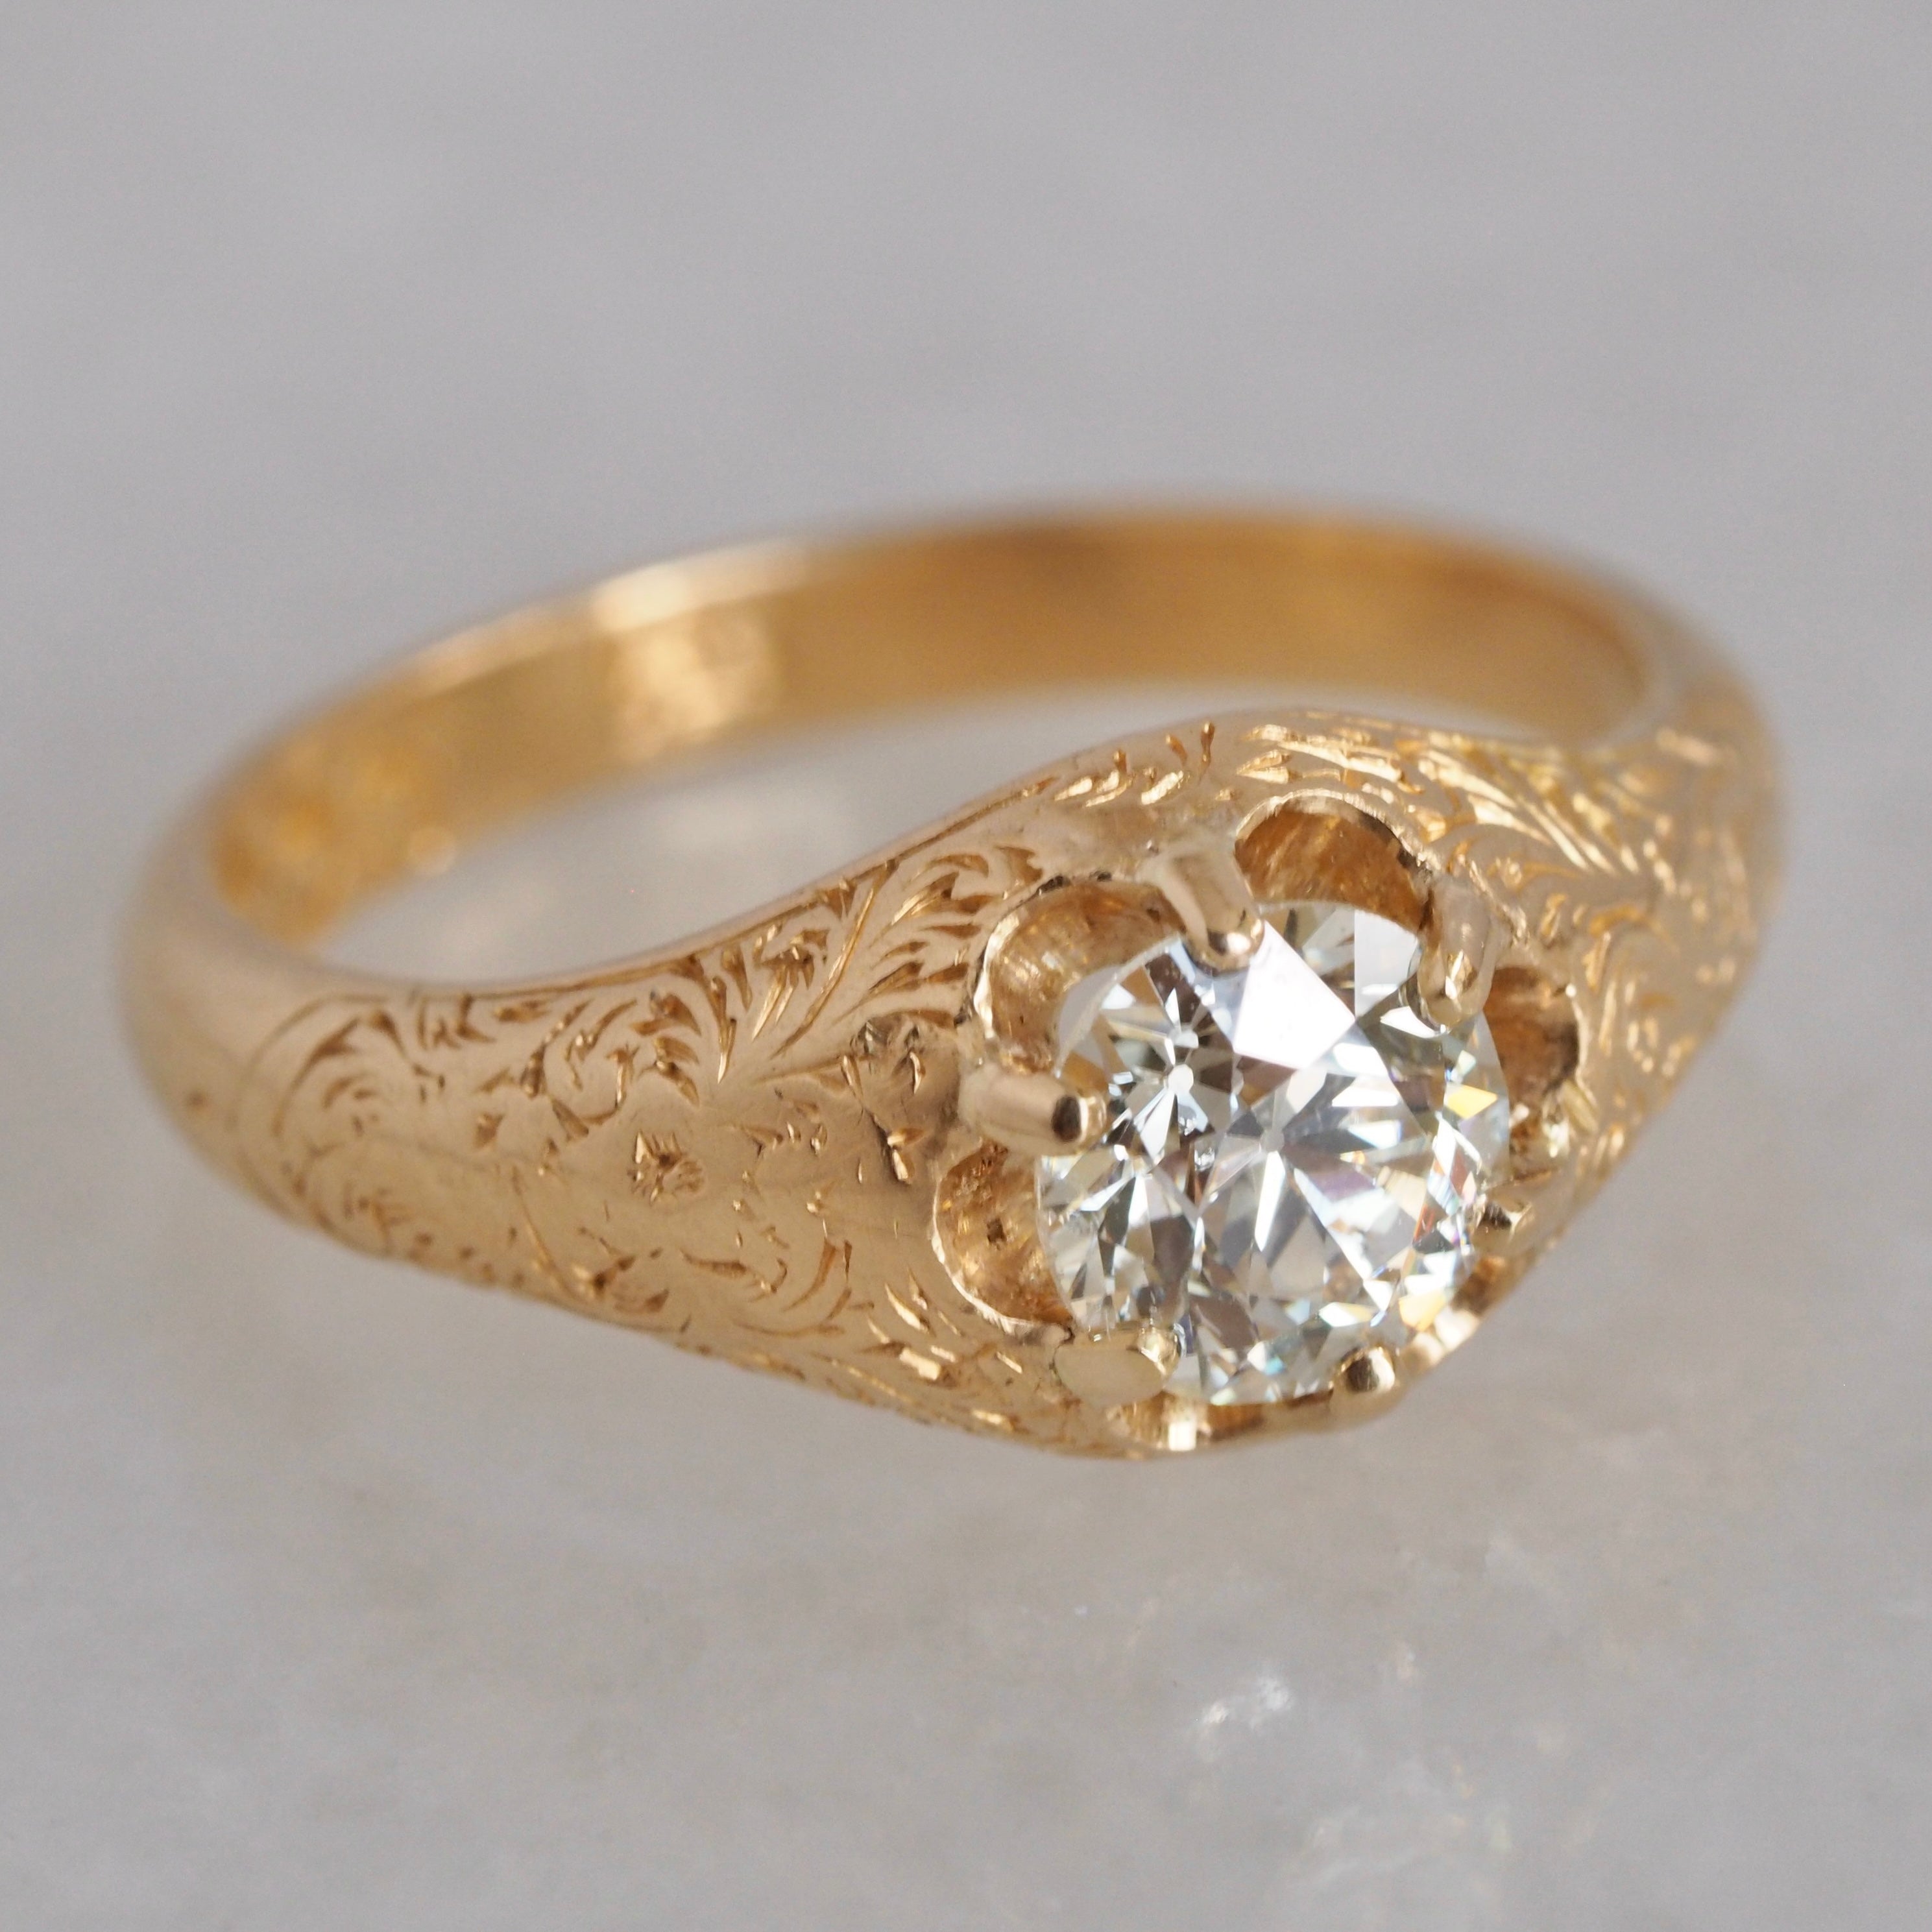 Antique Victorian c. 1860 English 18k Gold Belcher Set Old European Cut Diamond Engagement Ring